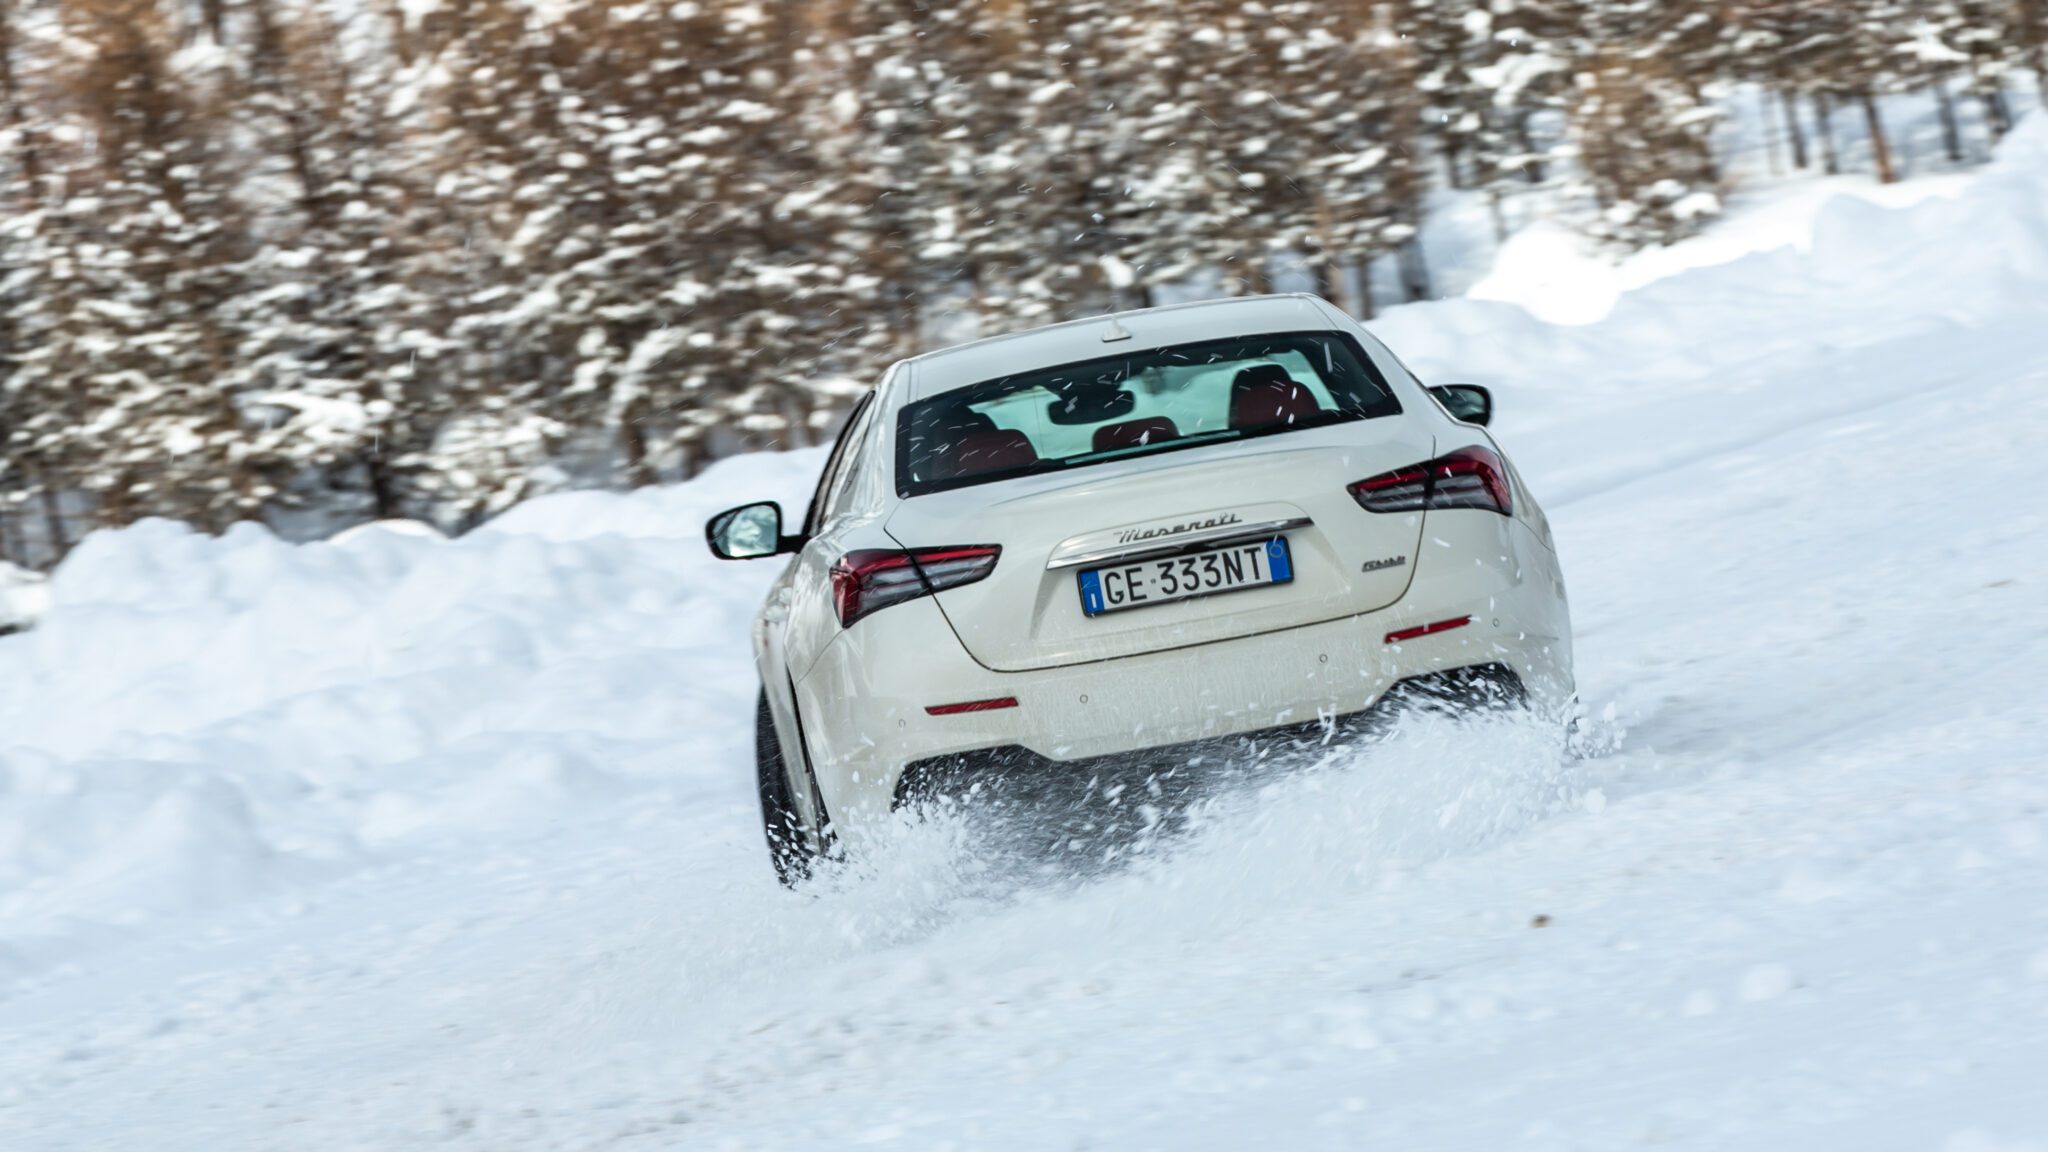 A white Maserati sedan drifting in the snow.